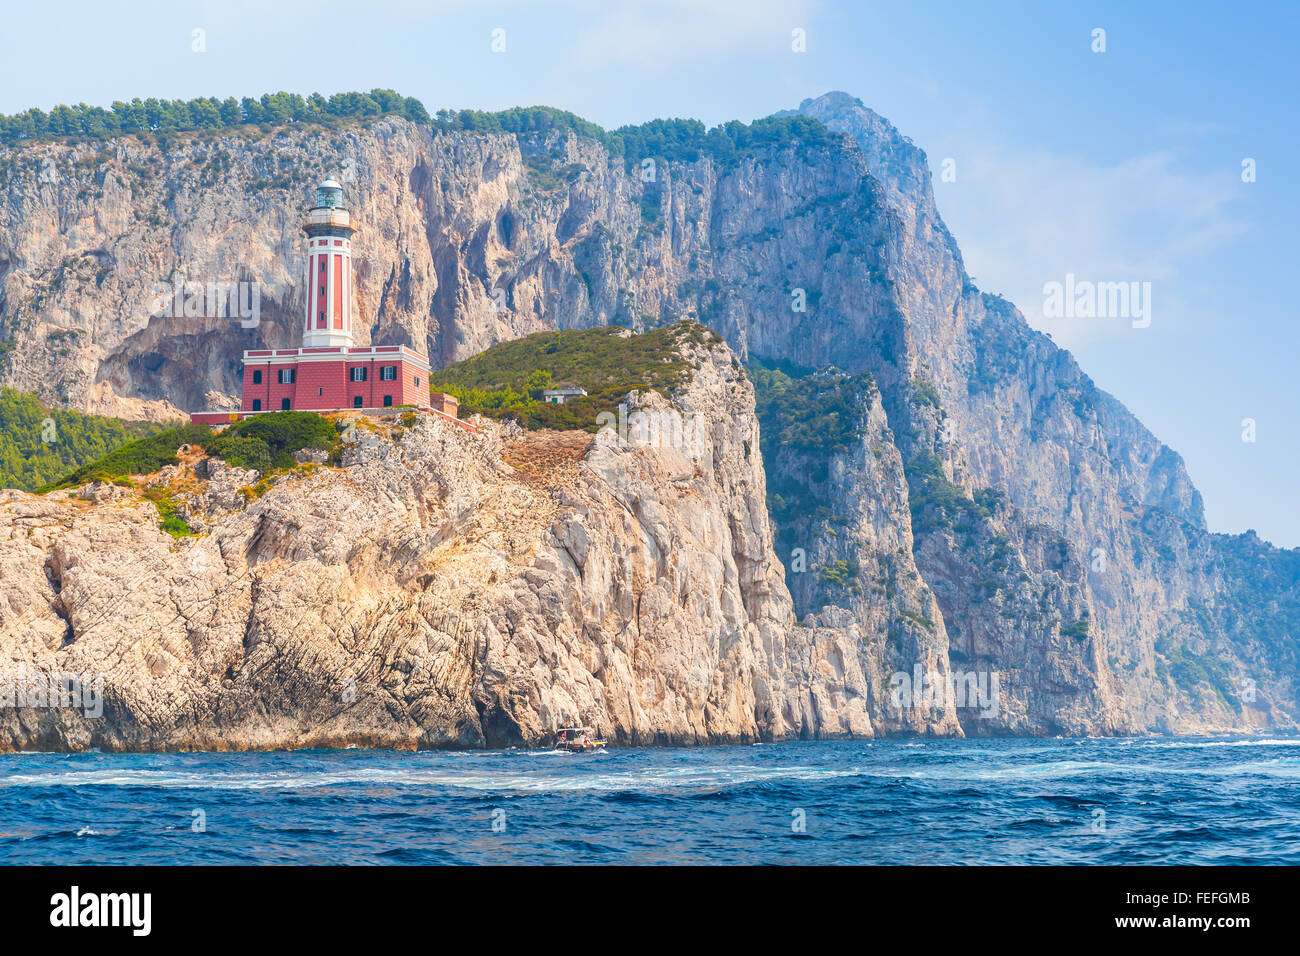 Punta Carena. Lighthouse stands on the rocky coast of Capri island, Italy Stock Photo